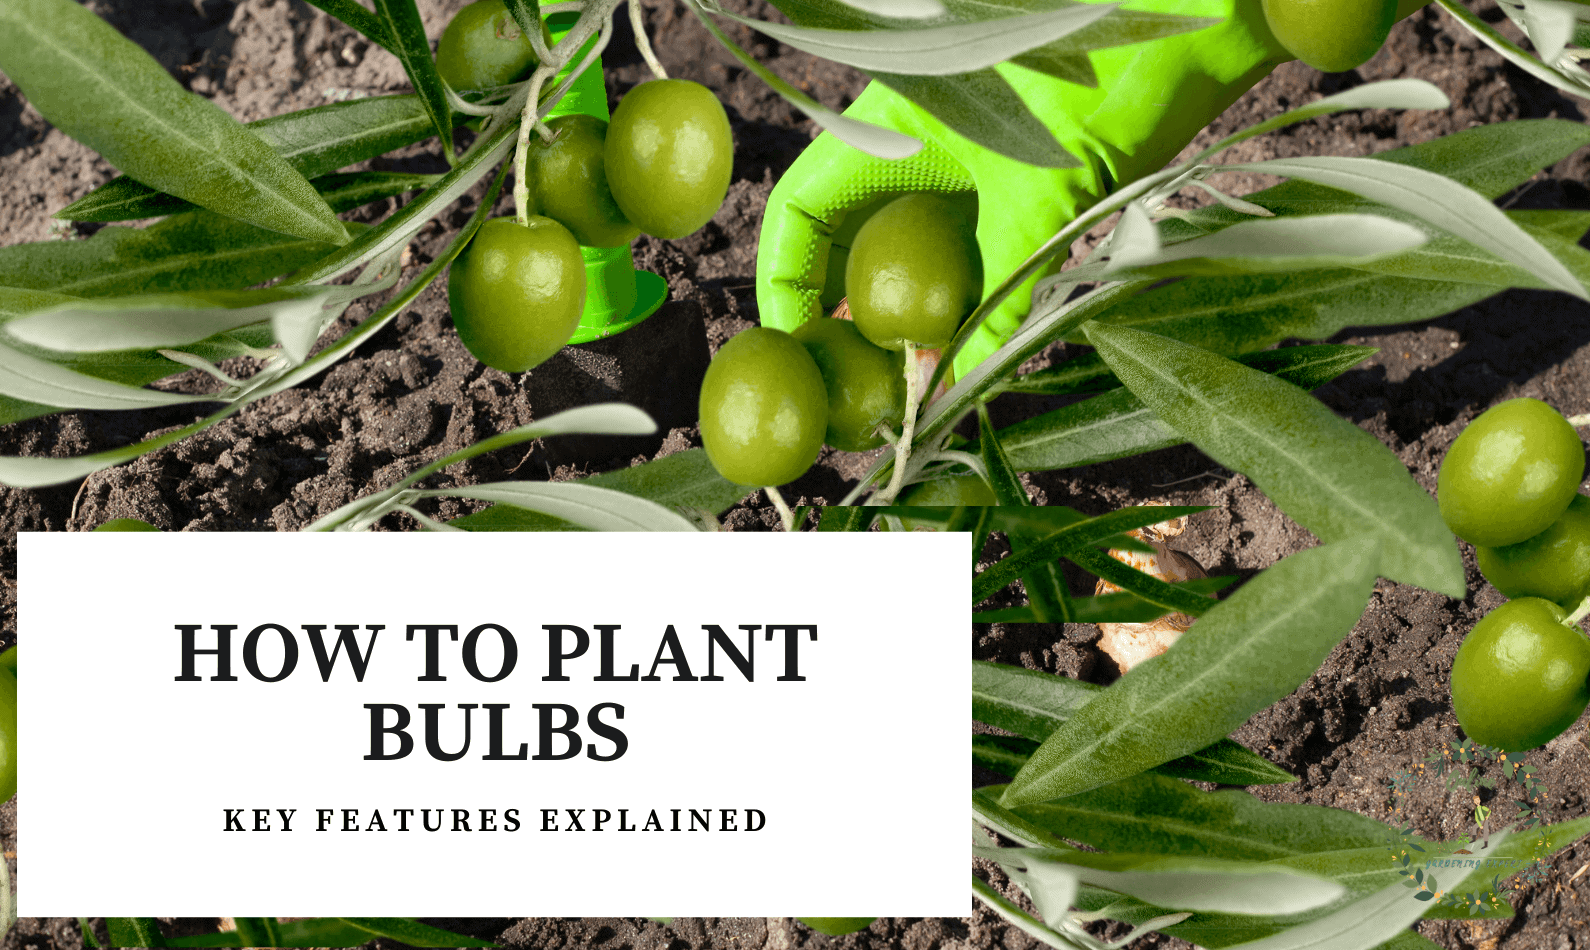 How to Plant Bulbs